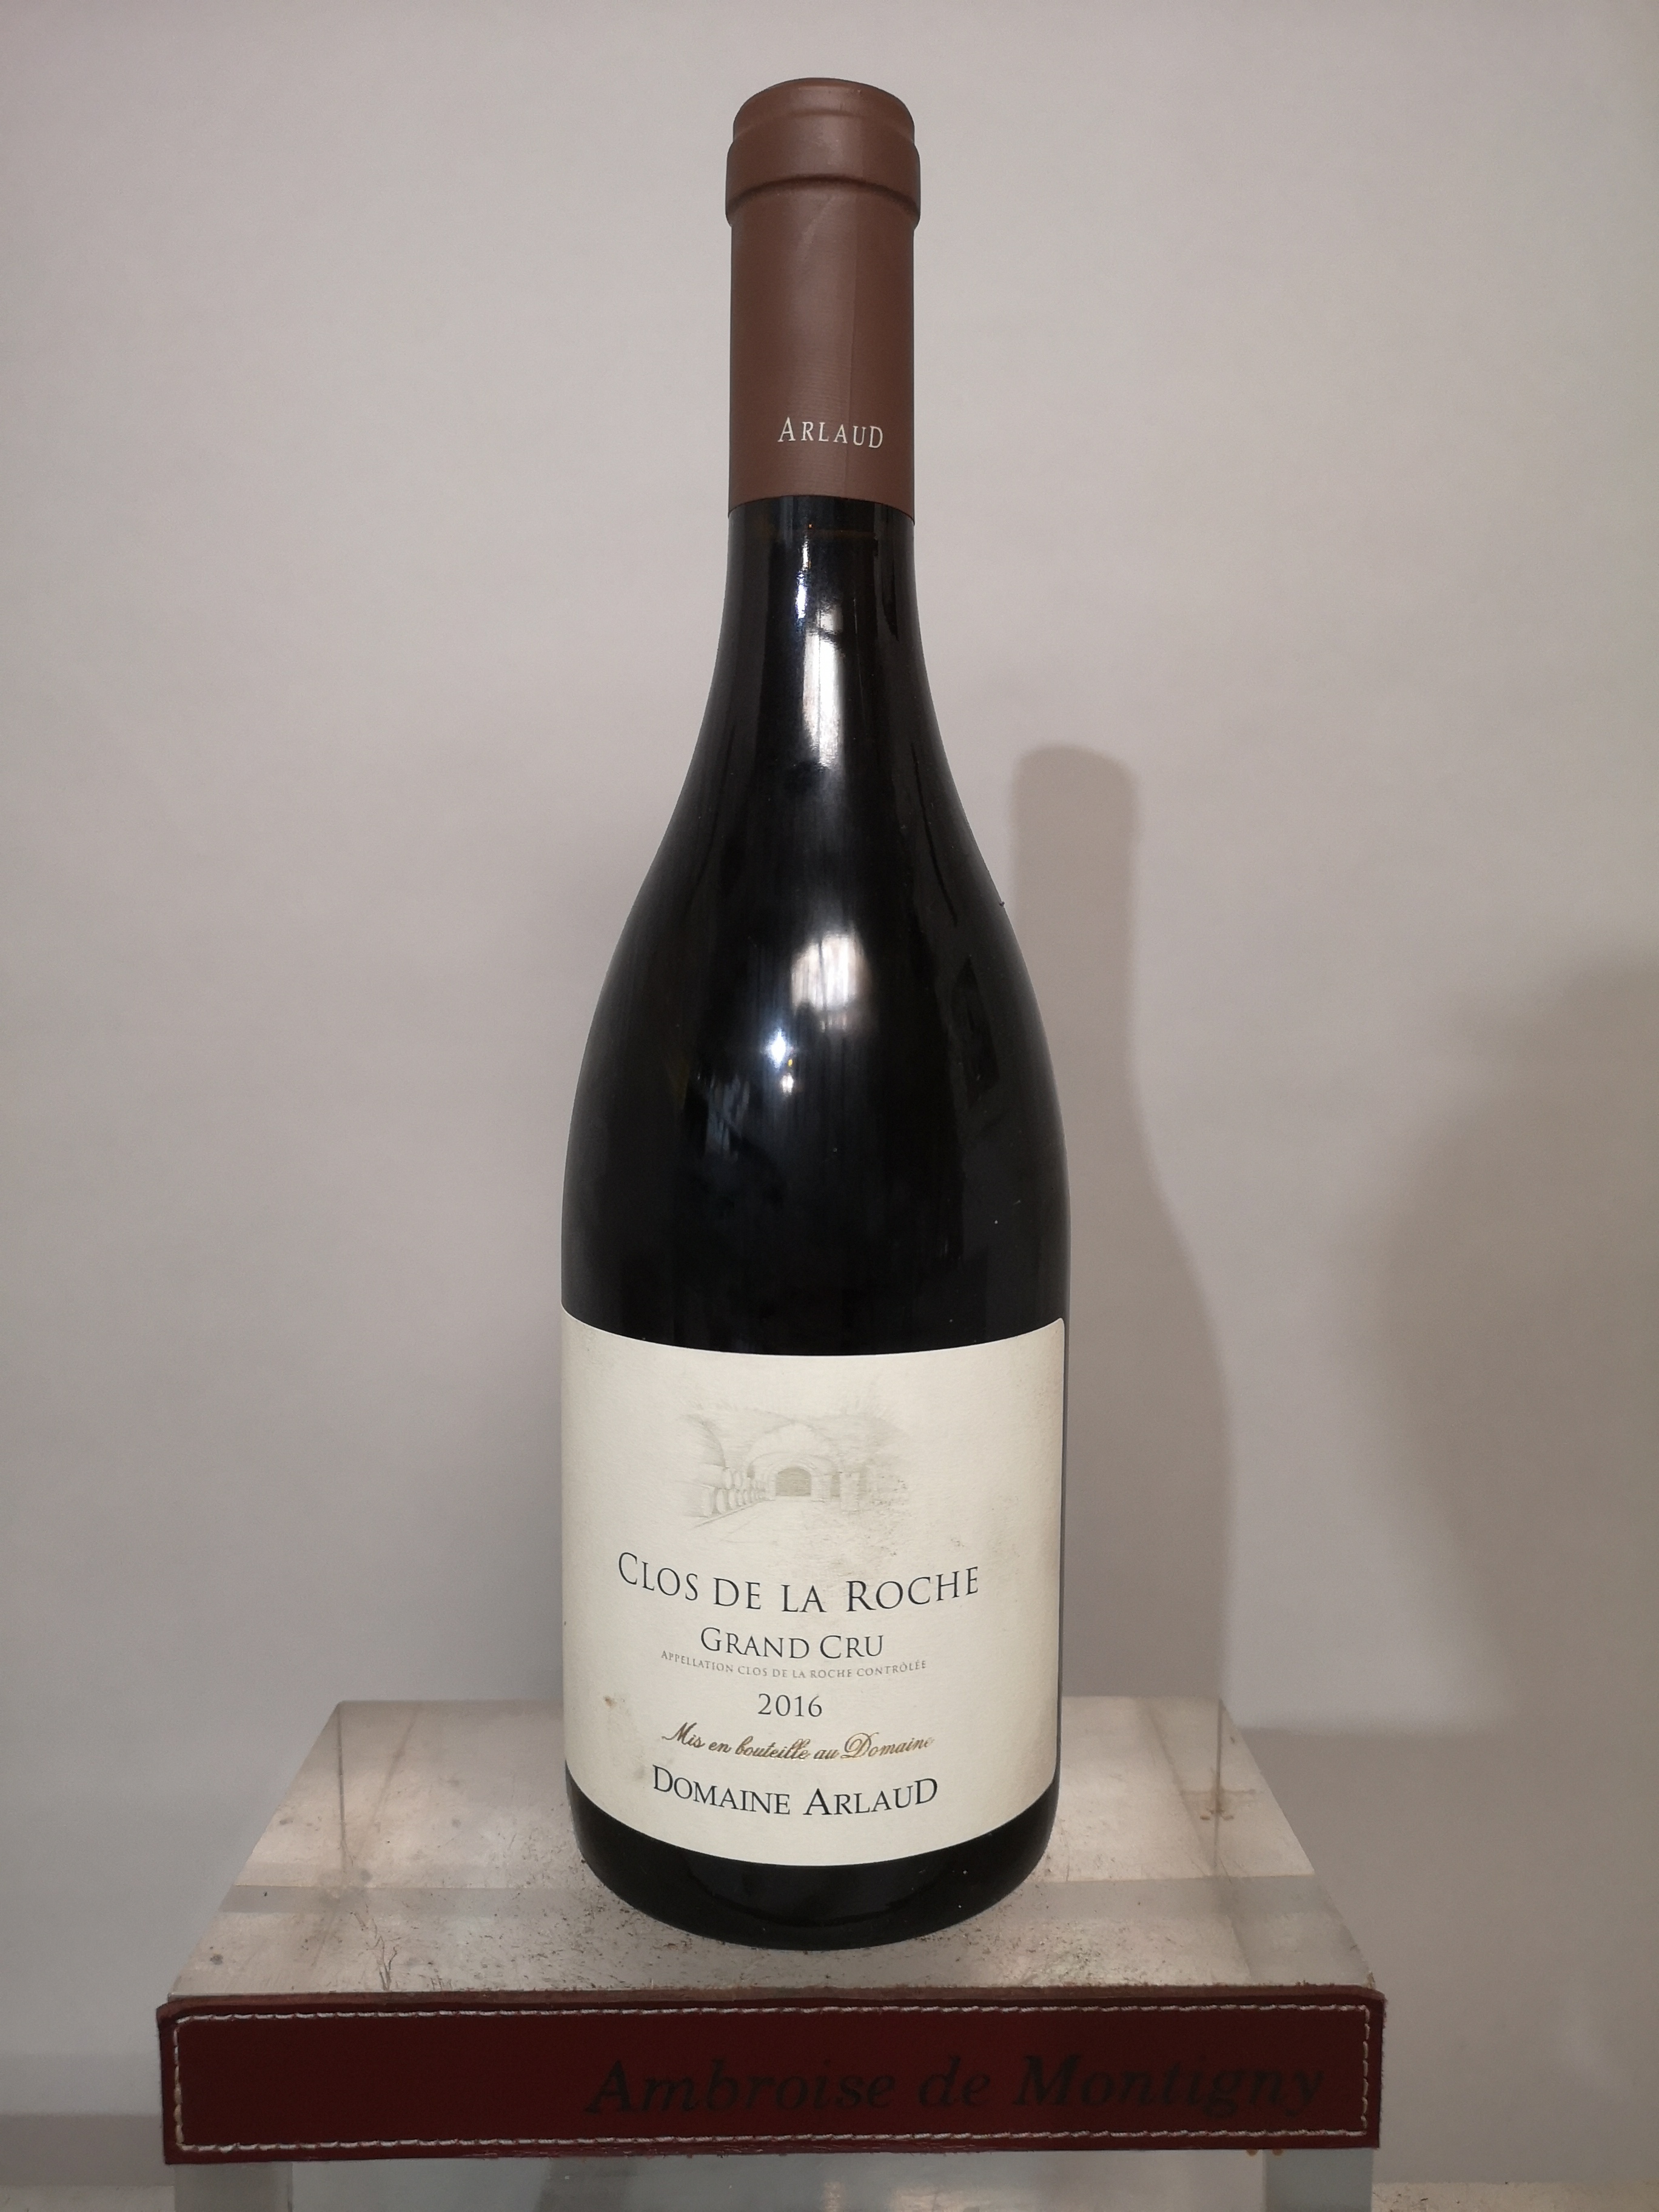 1 bottle CLOS de La ROCHE Grand Cru - Domaine ARLAUD 2016.
 Labels slightly stained.